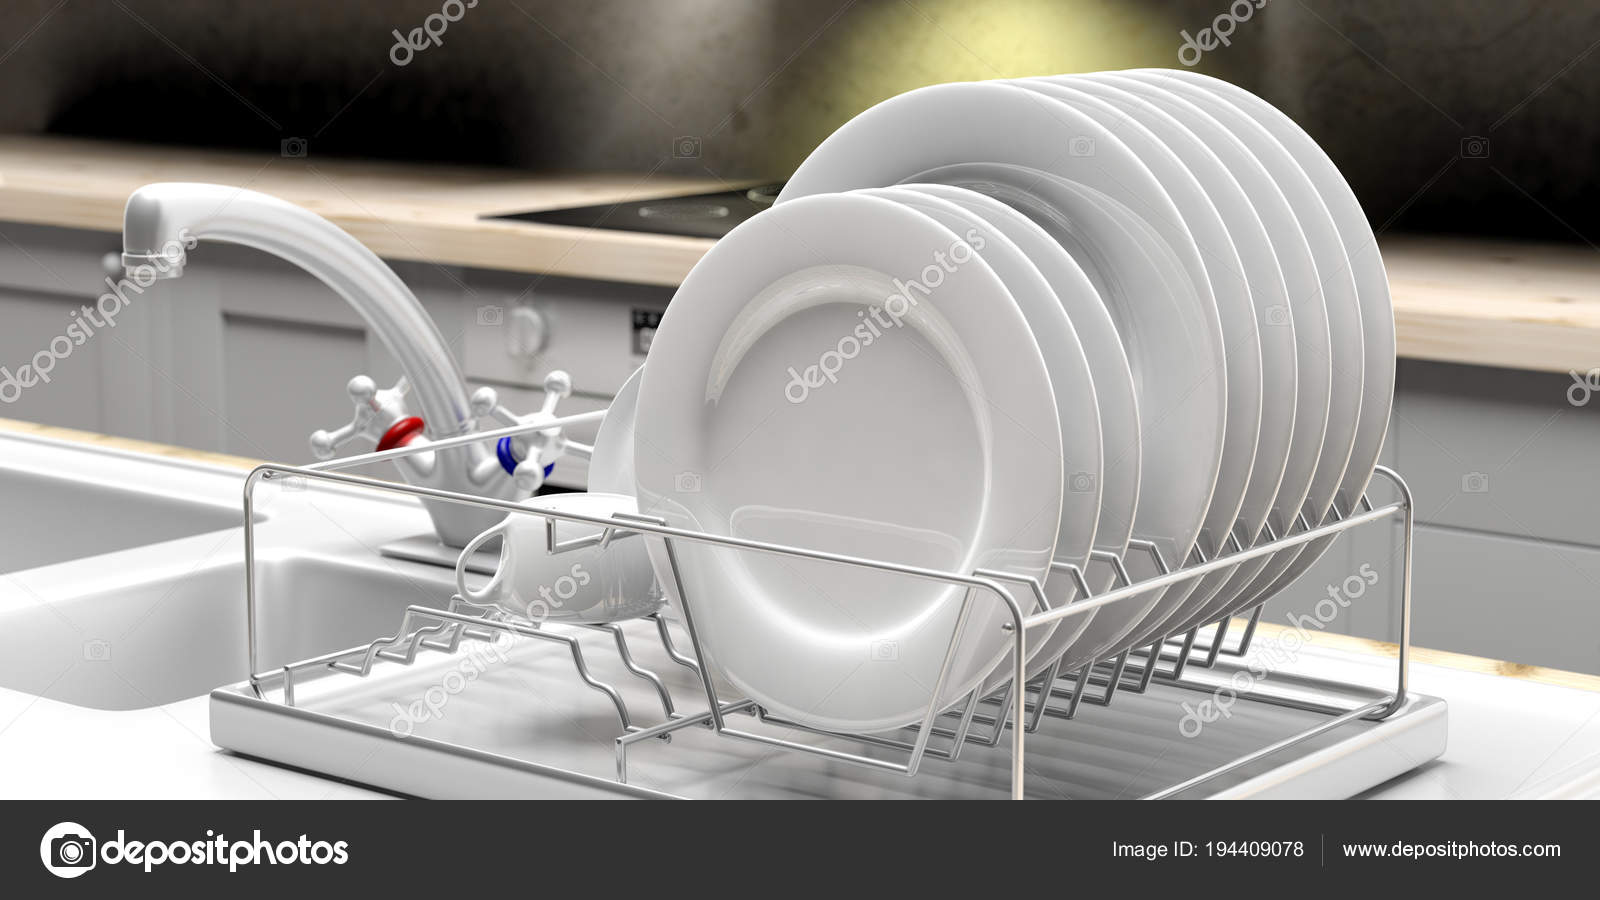 https://st3.depositphotos.com/8846918/19440/i/1600/depositphotos_194409078-stock-photo-dish-drying-rack-with-white.jpg